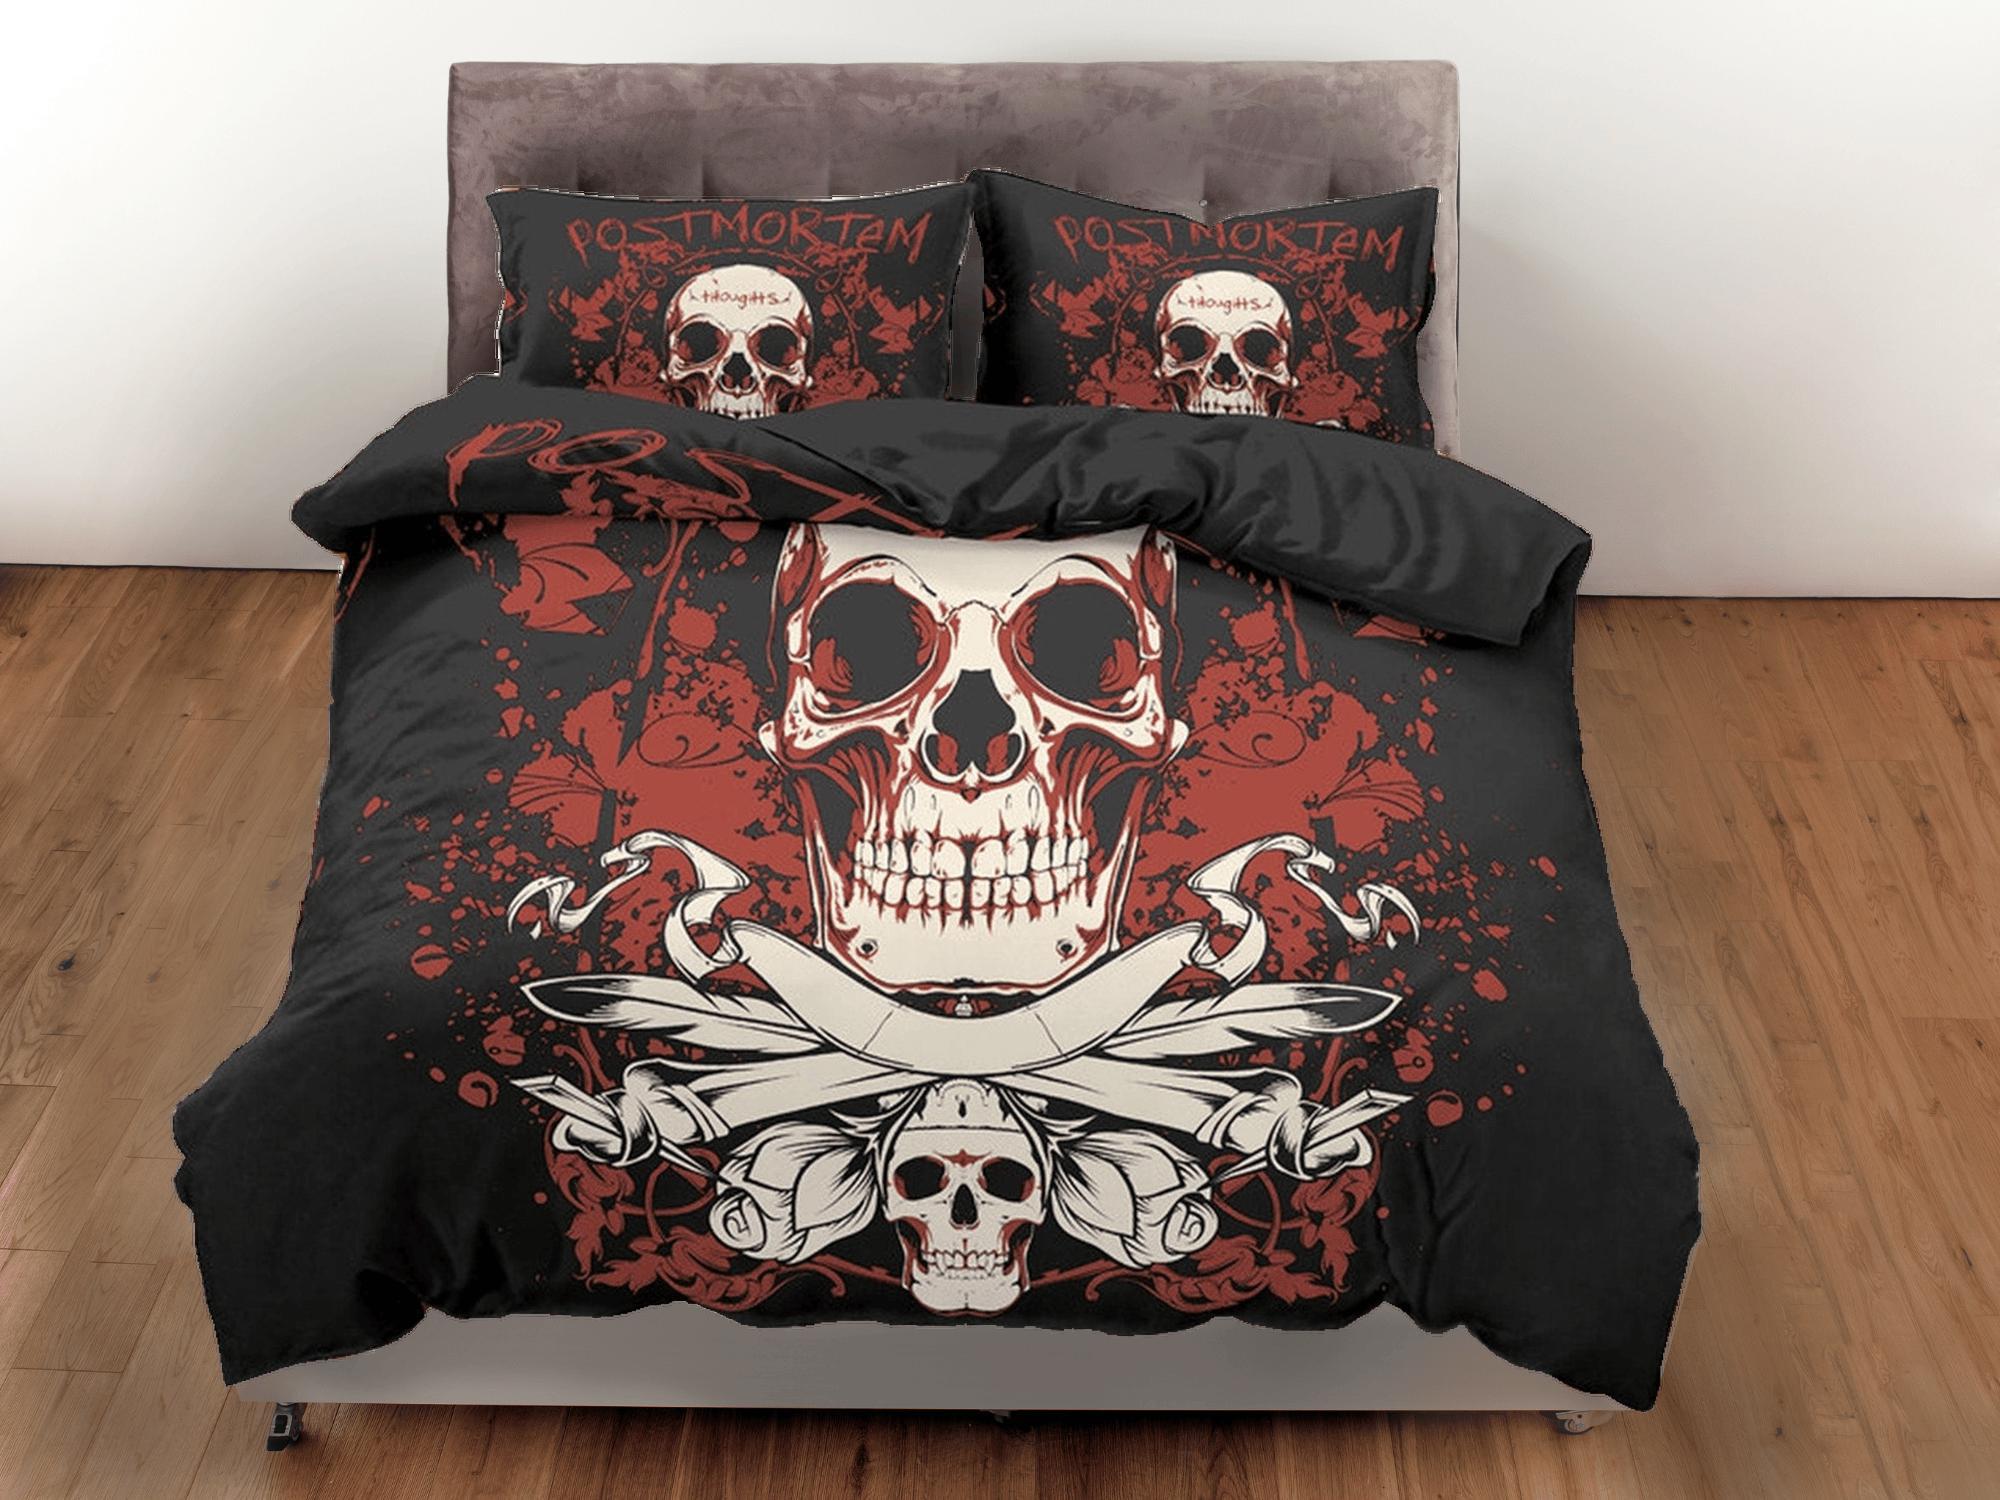 daintyduvet Skull in Flames Black Duvet Cover Set Bedspread, Dorm Bedding with Pillowcase